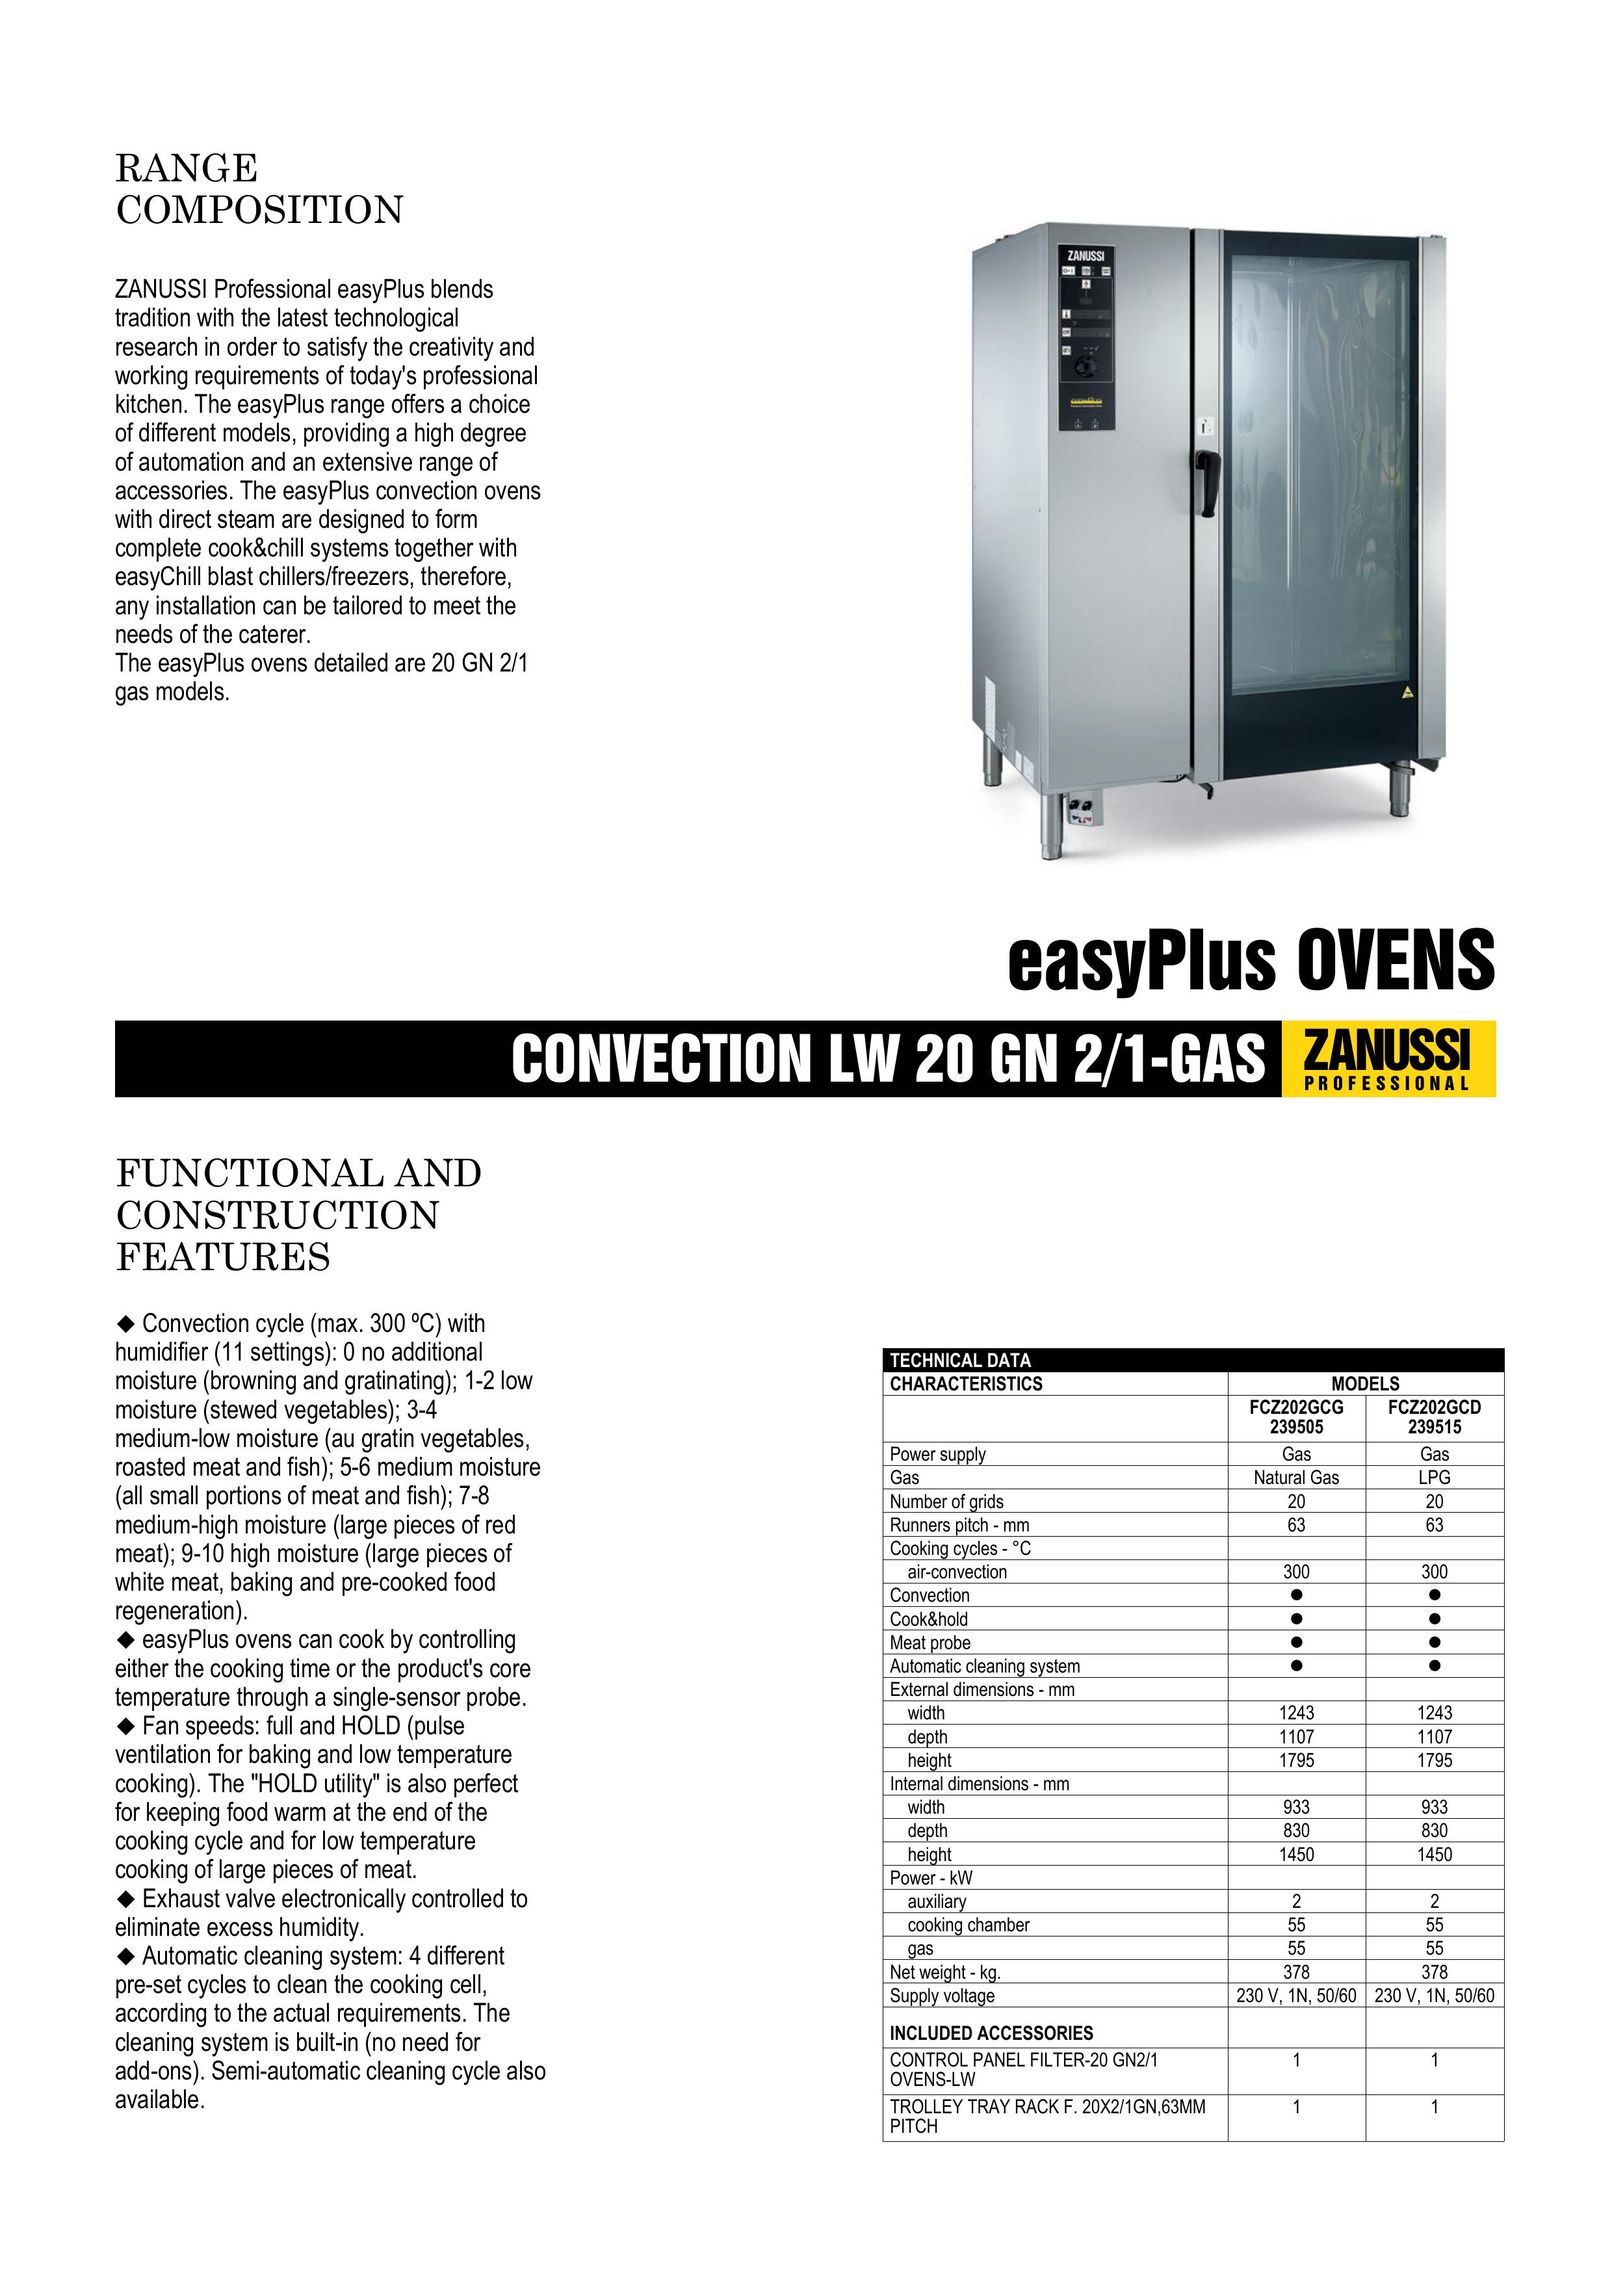 Zanussi 239515 Convection Oven User Manual